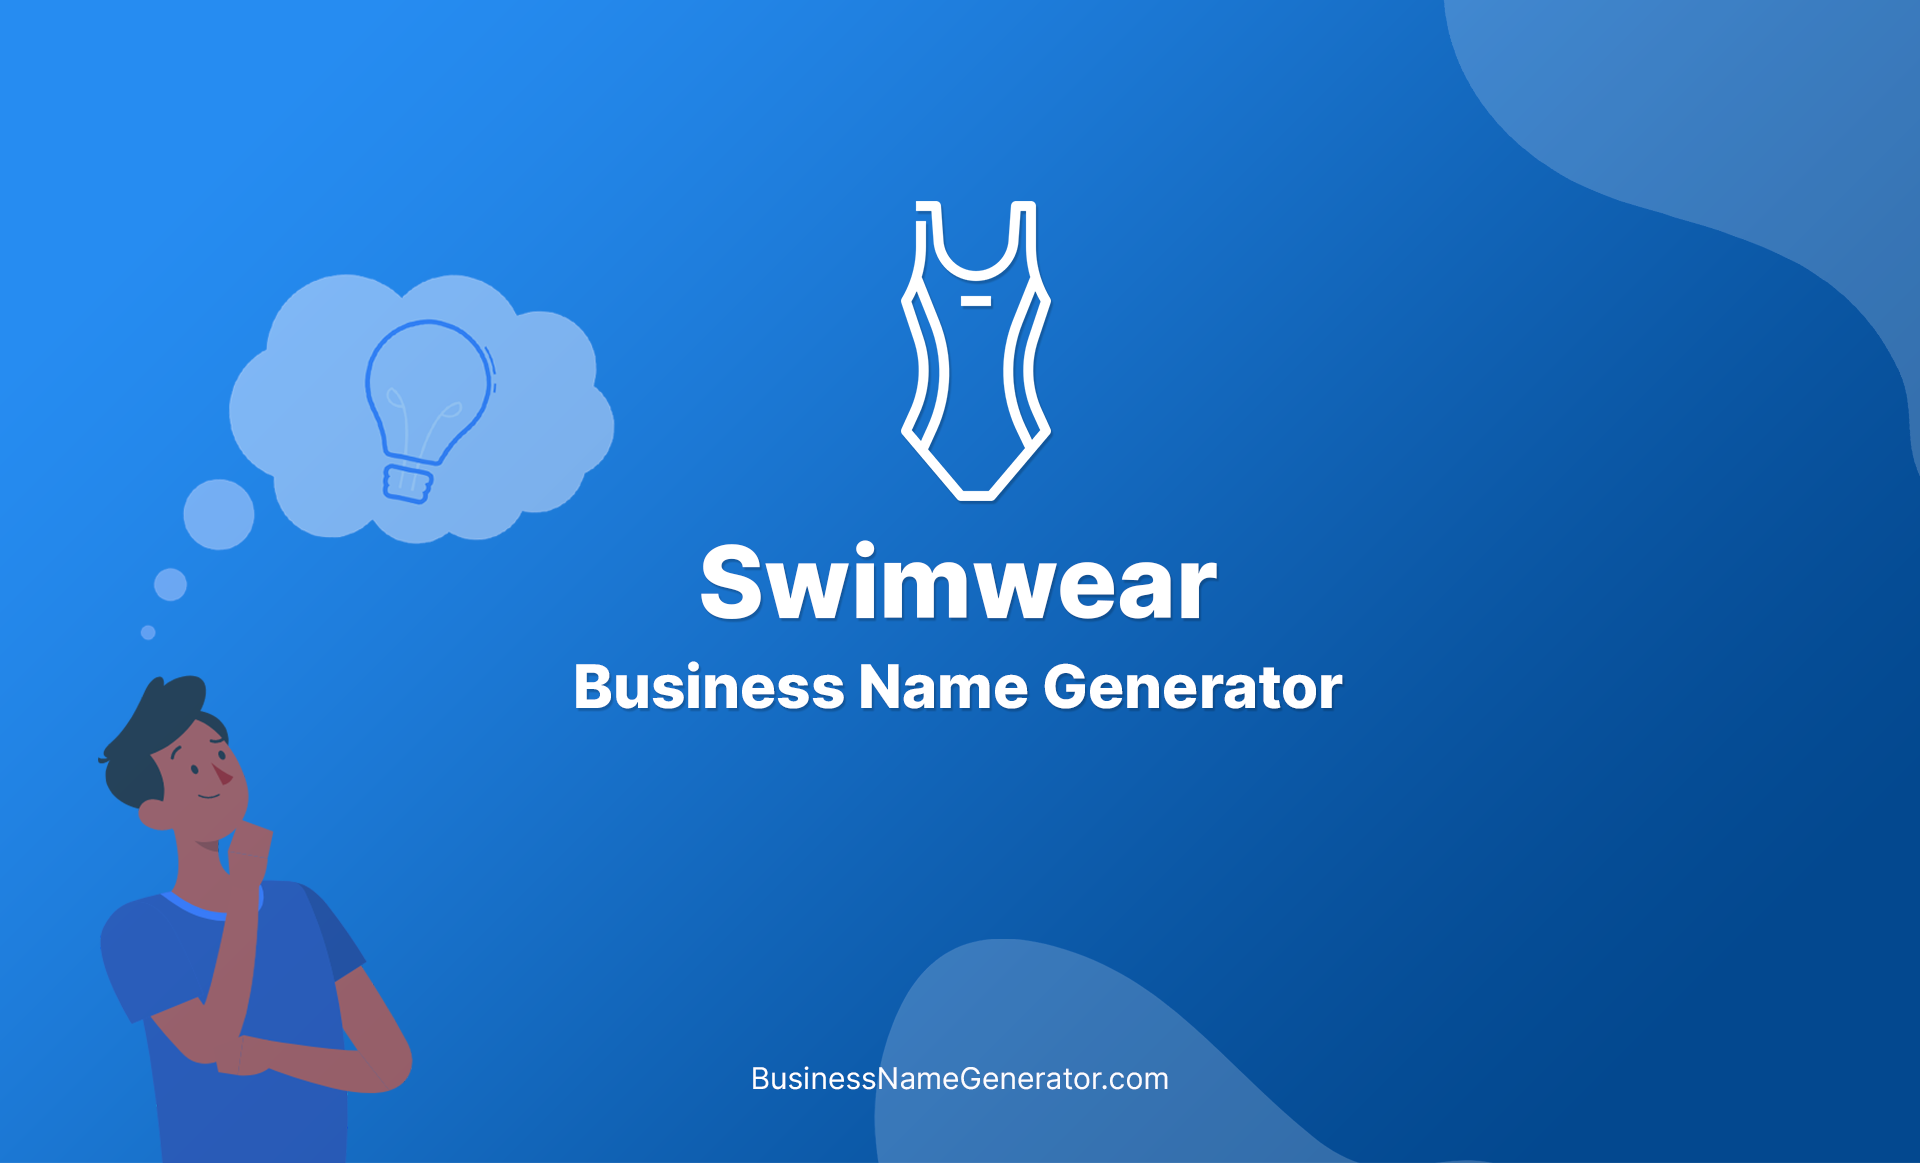 Swimwear Business Name Generator